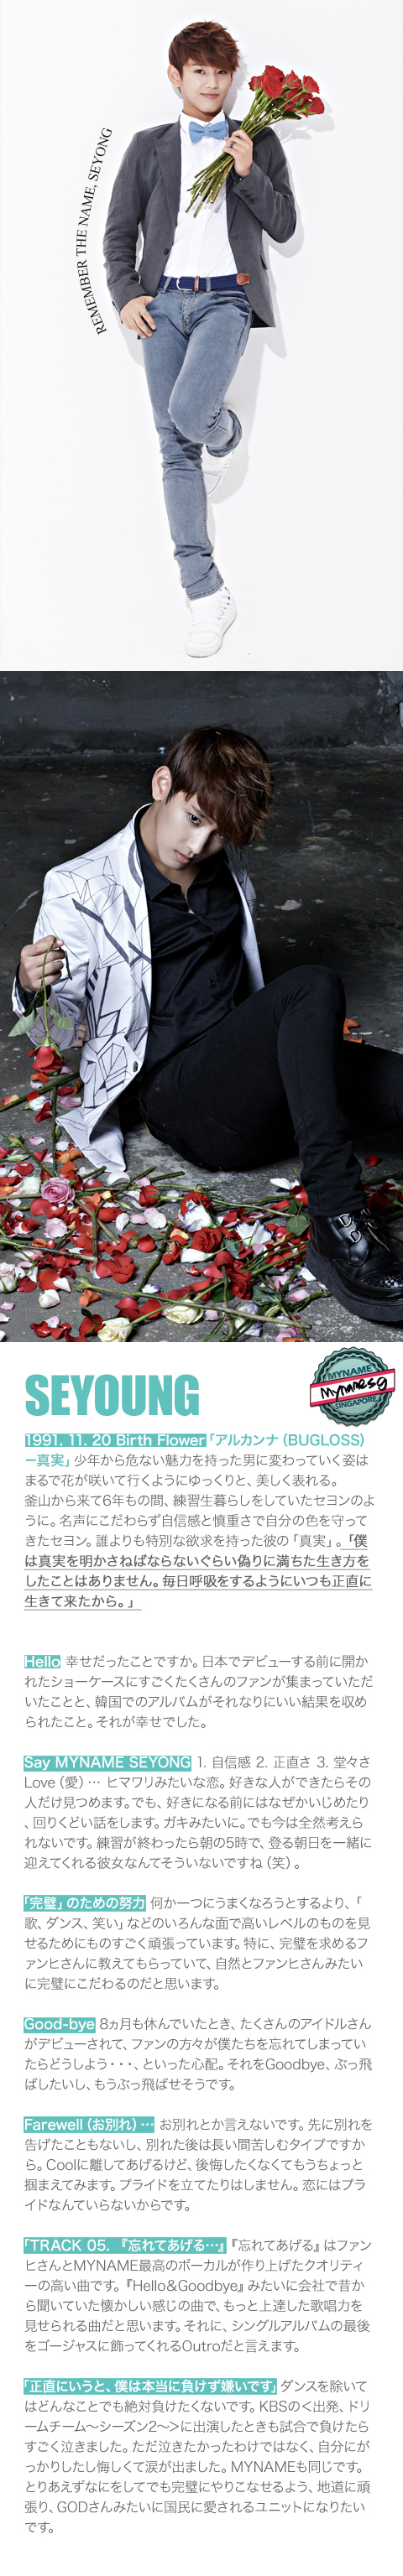 (صور) MYNAME في مجلة SBS Inkigayo  P055-copy